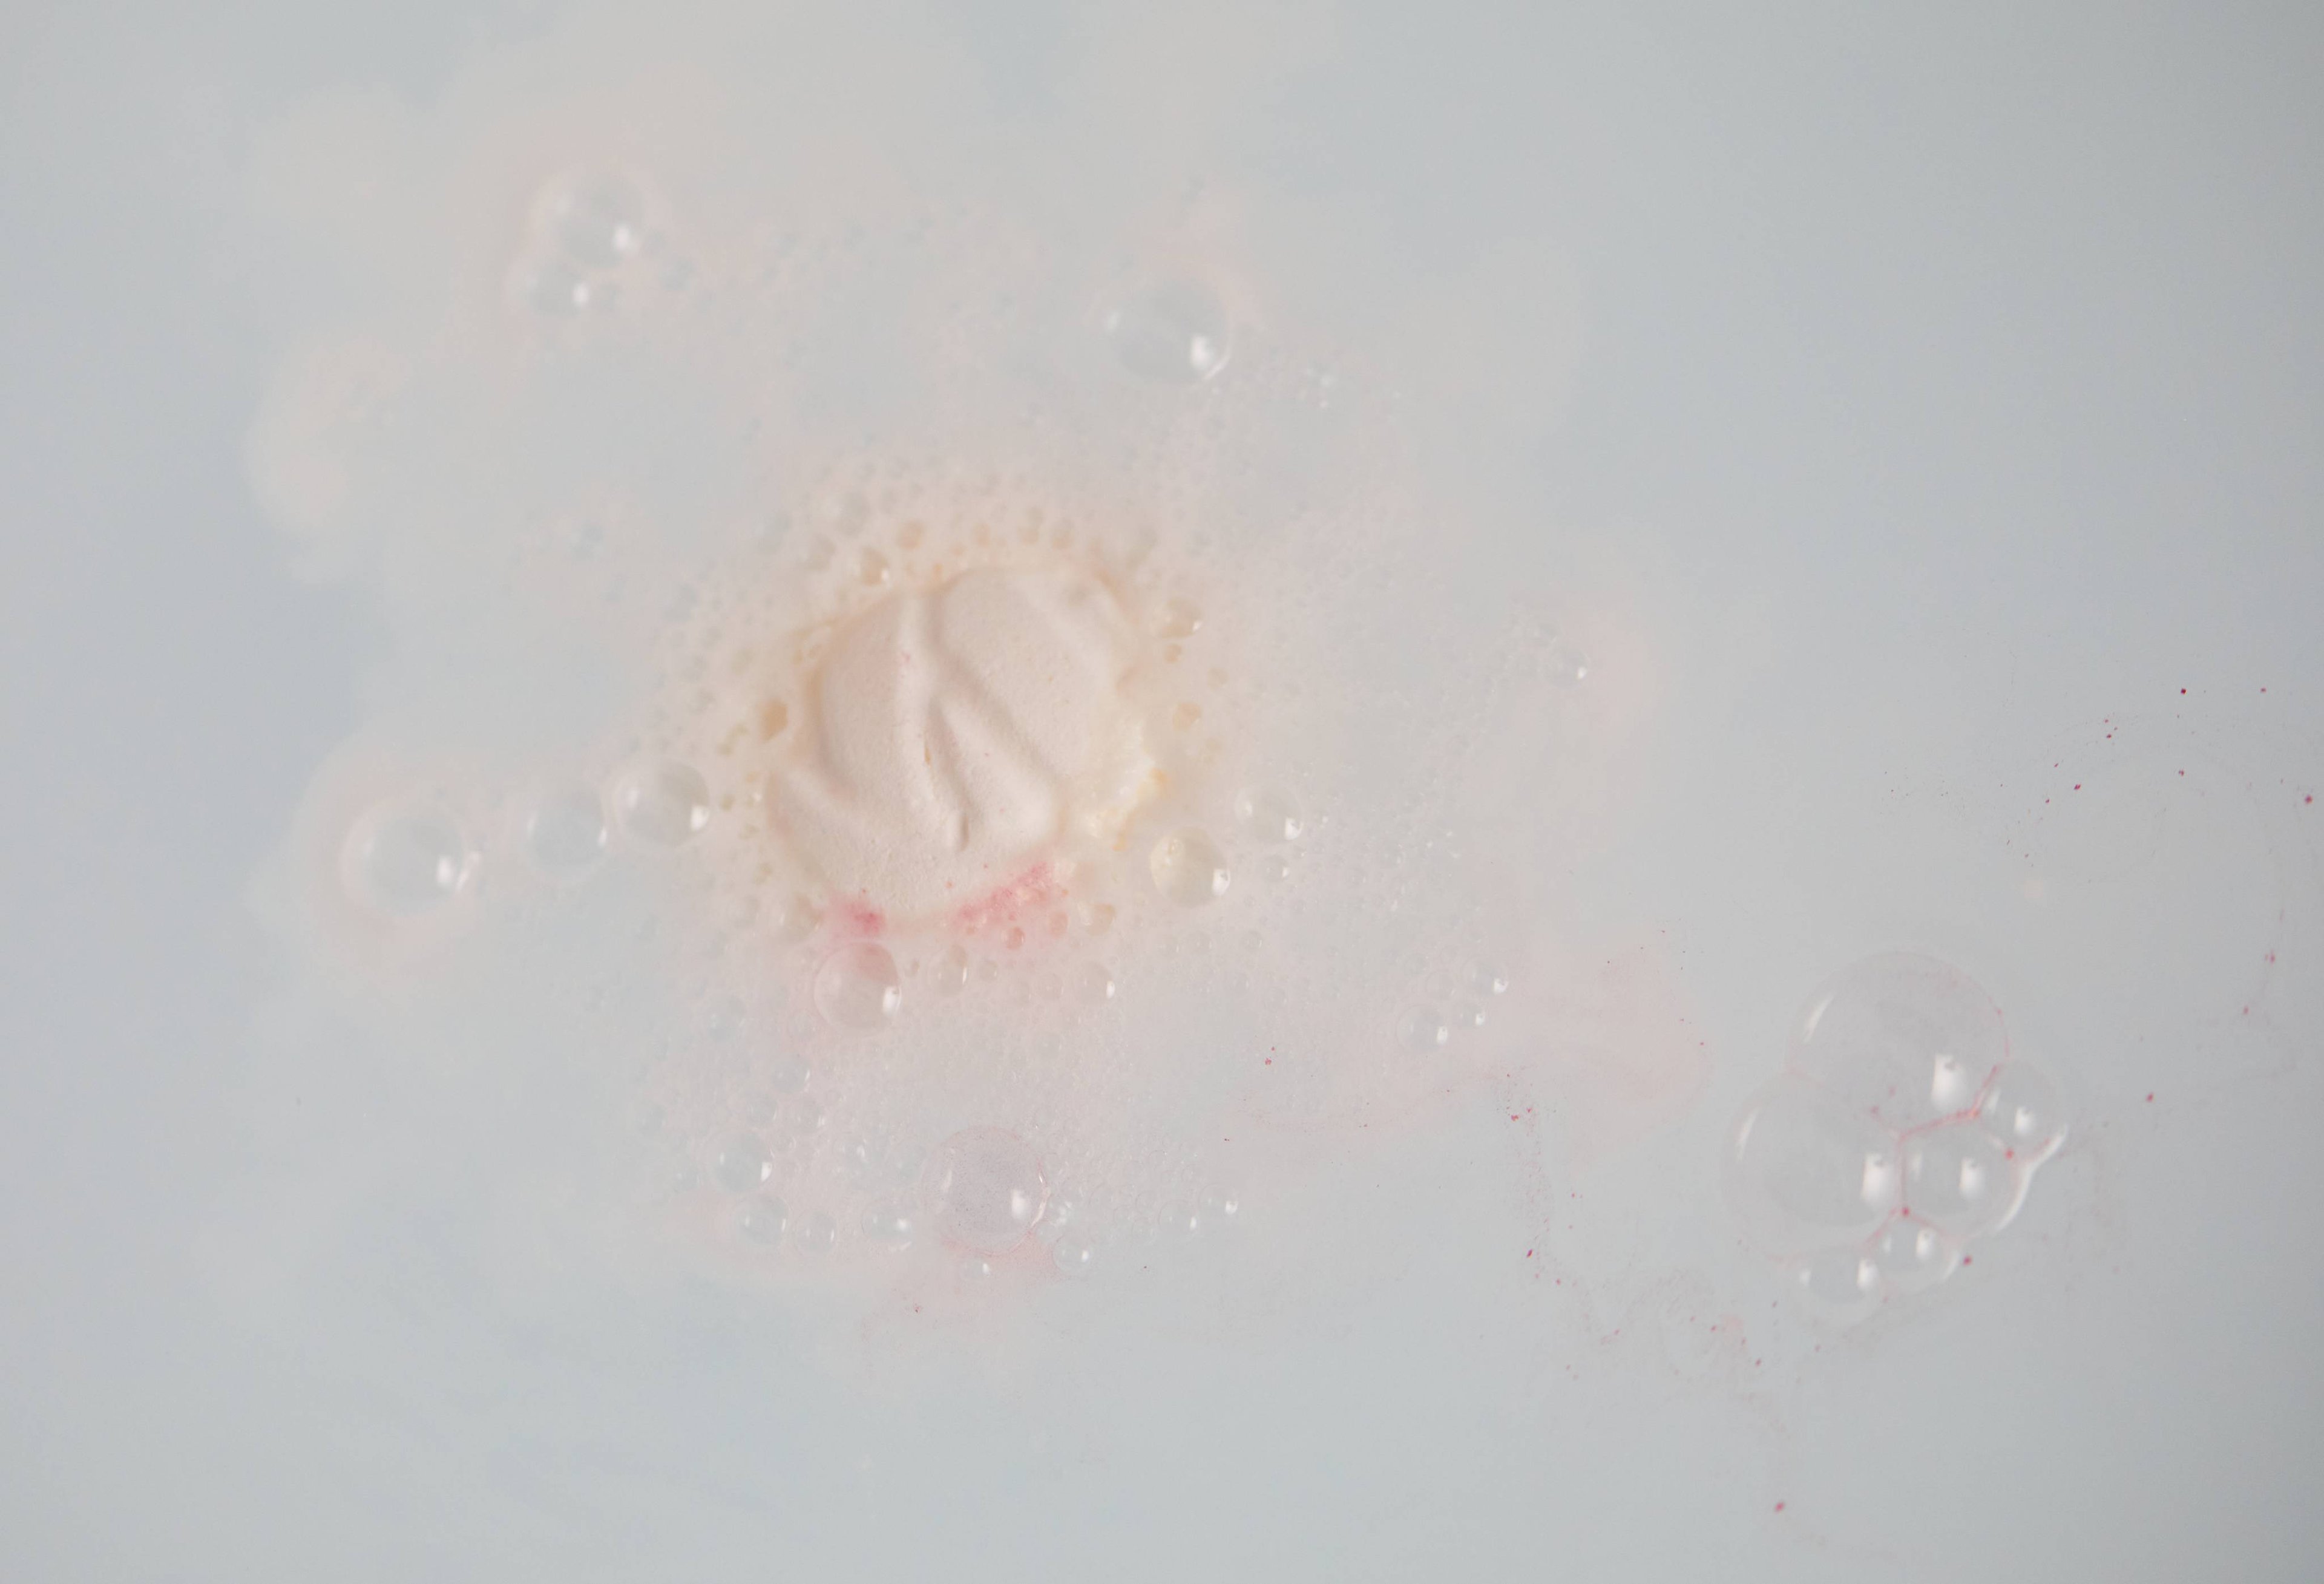 Bath bomb slowly dissolves in the bathwater creating subtle, creamy swirls of velvety water. 